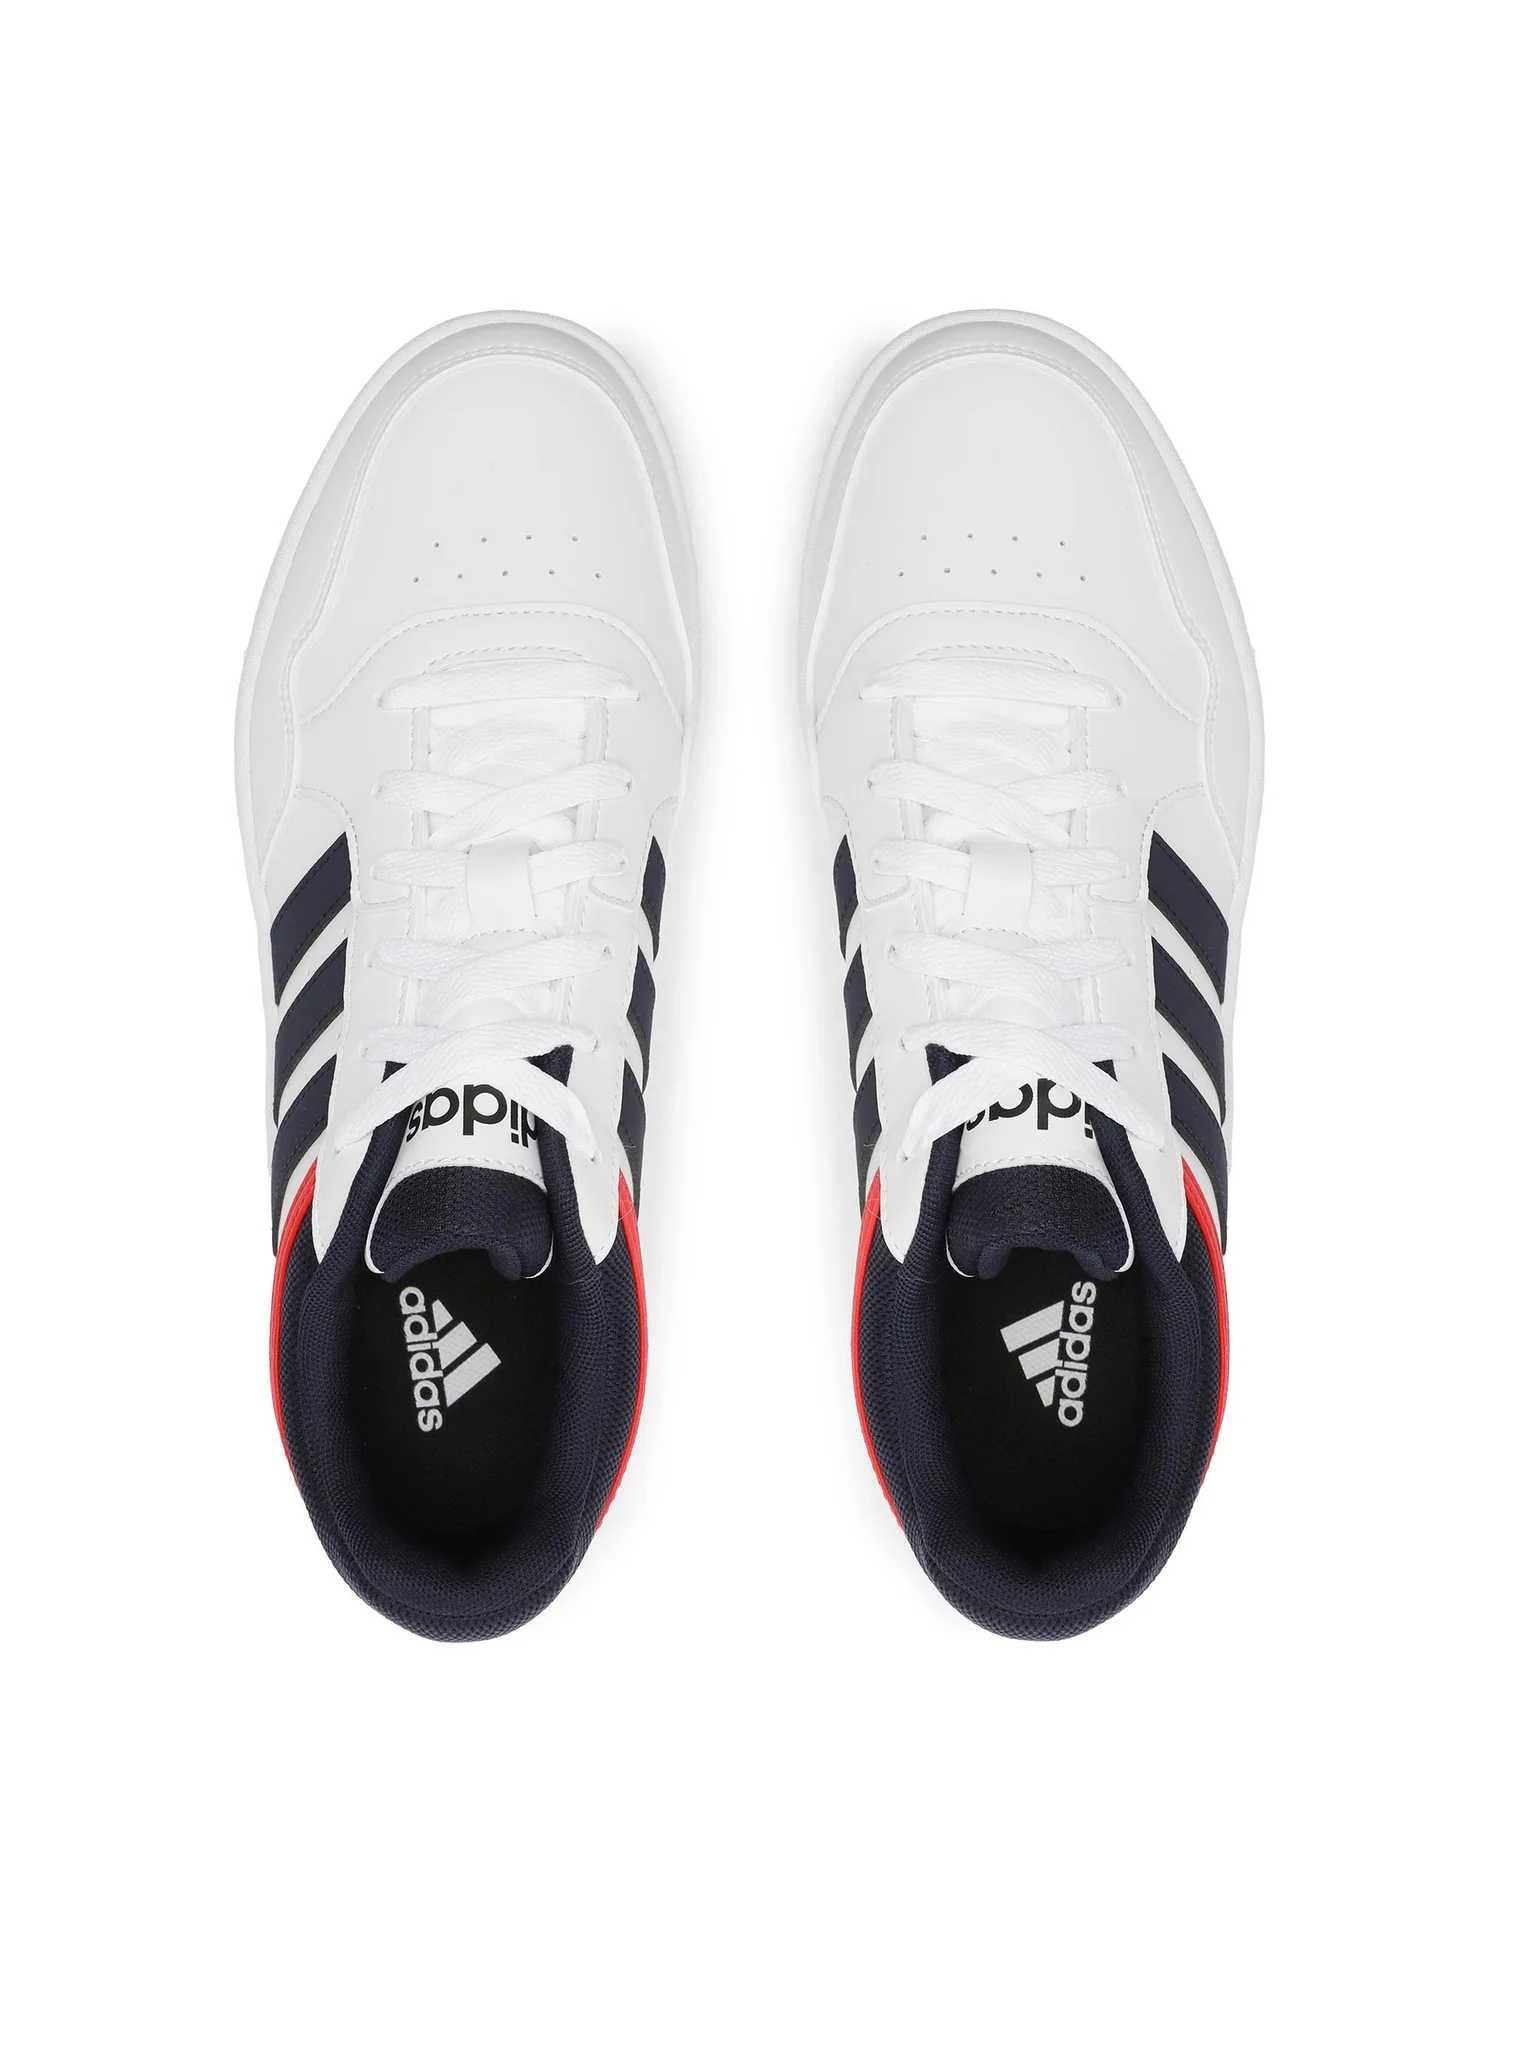 (Adidas)Адідас Взуття Hoops 3.0